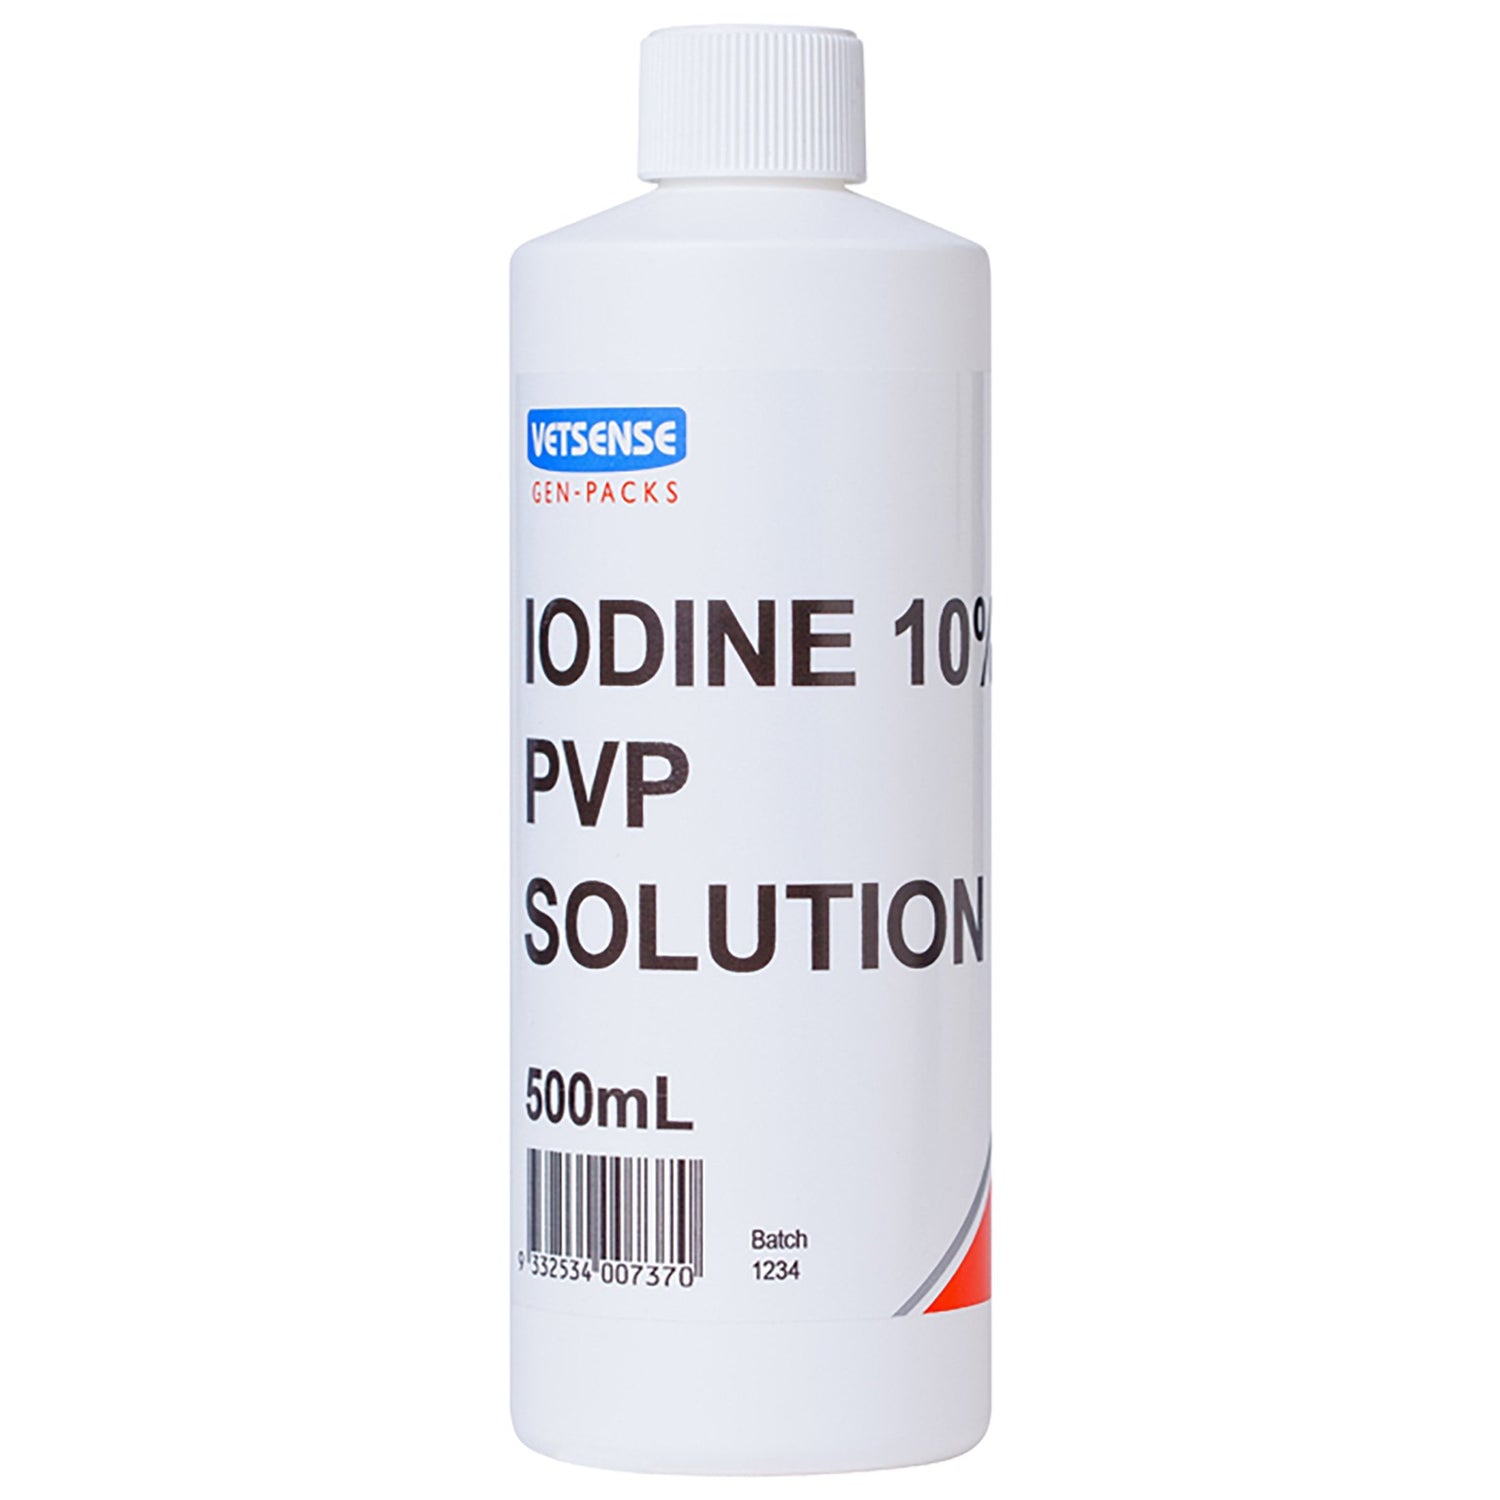 Vetsense Gen Pack Iodine 10% PVP 500ml